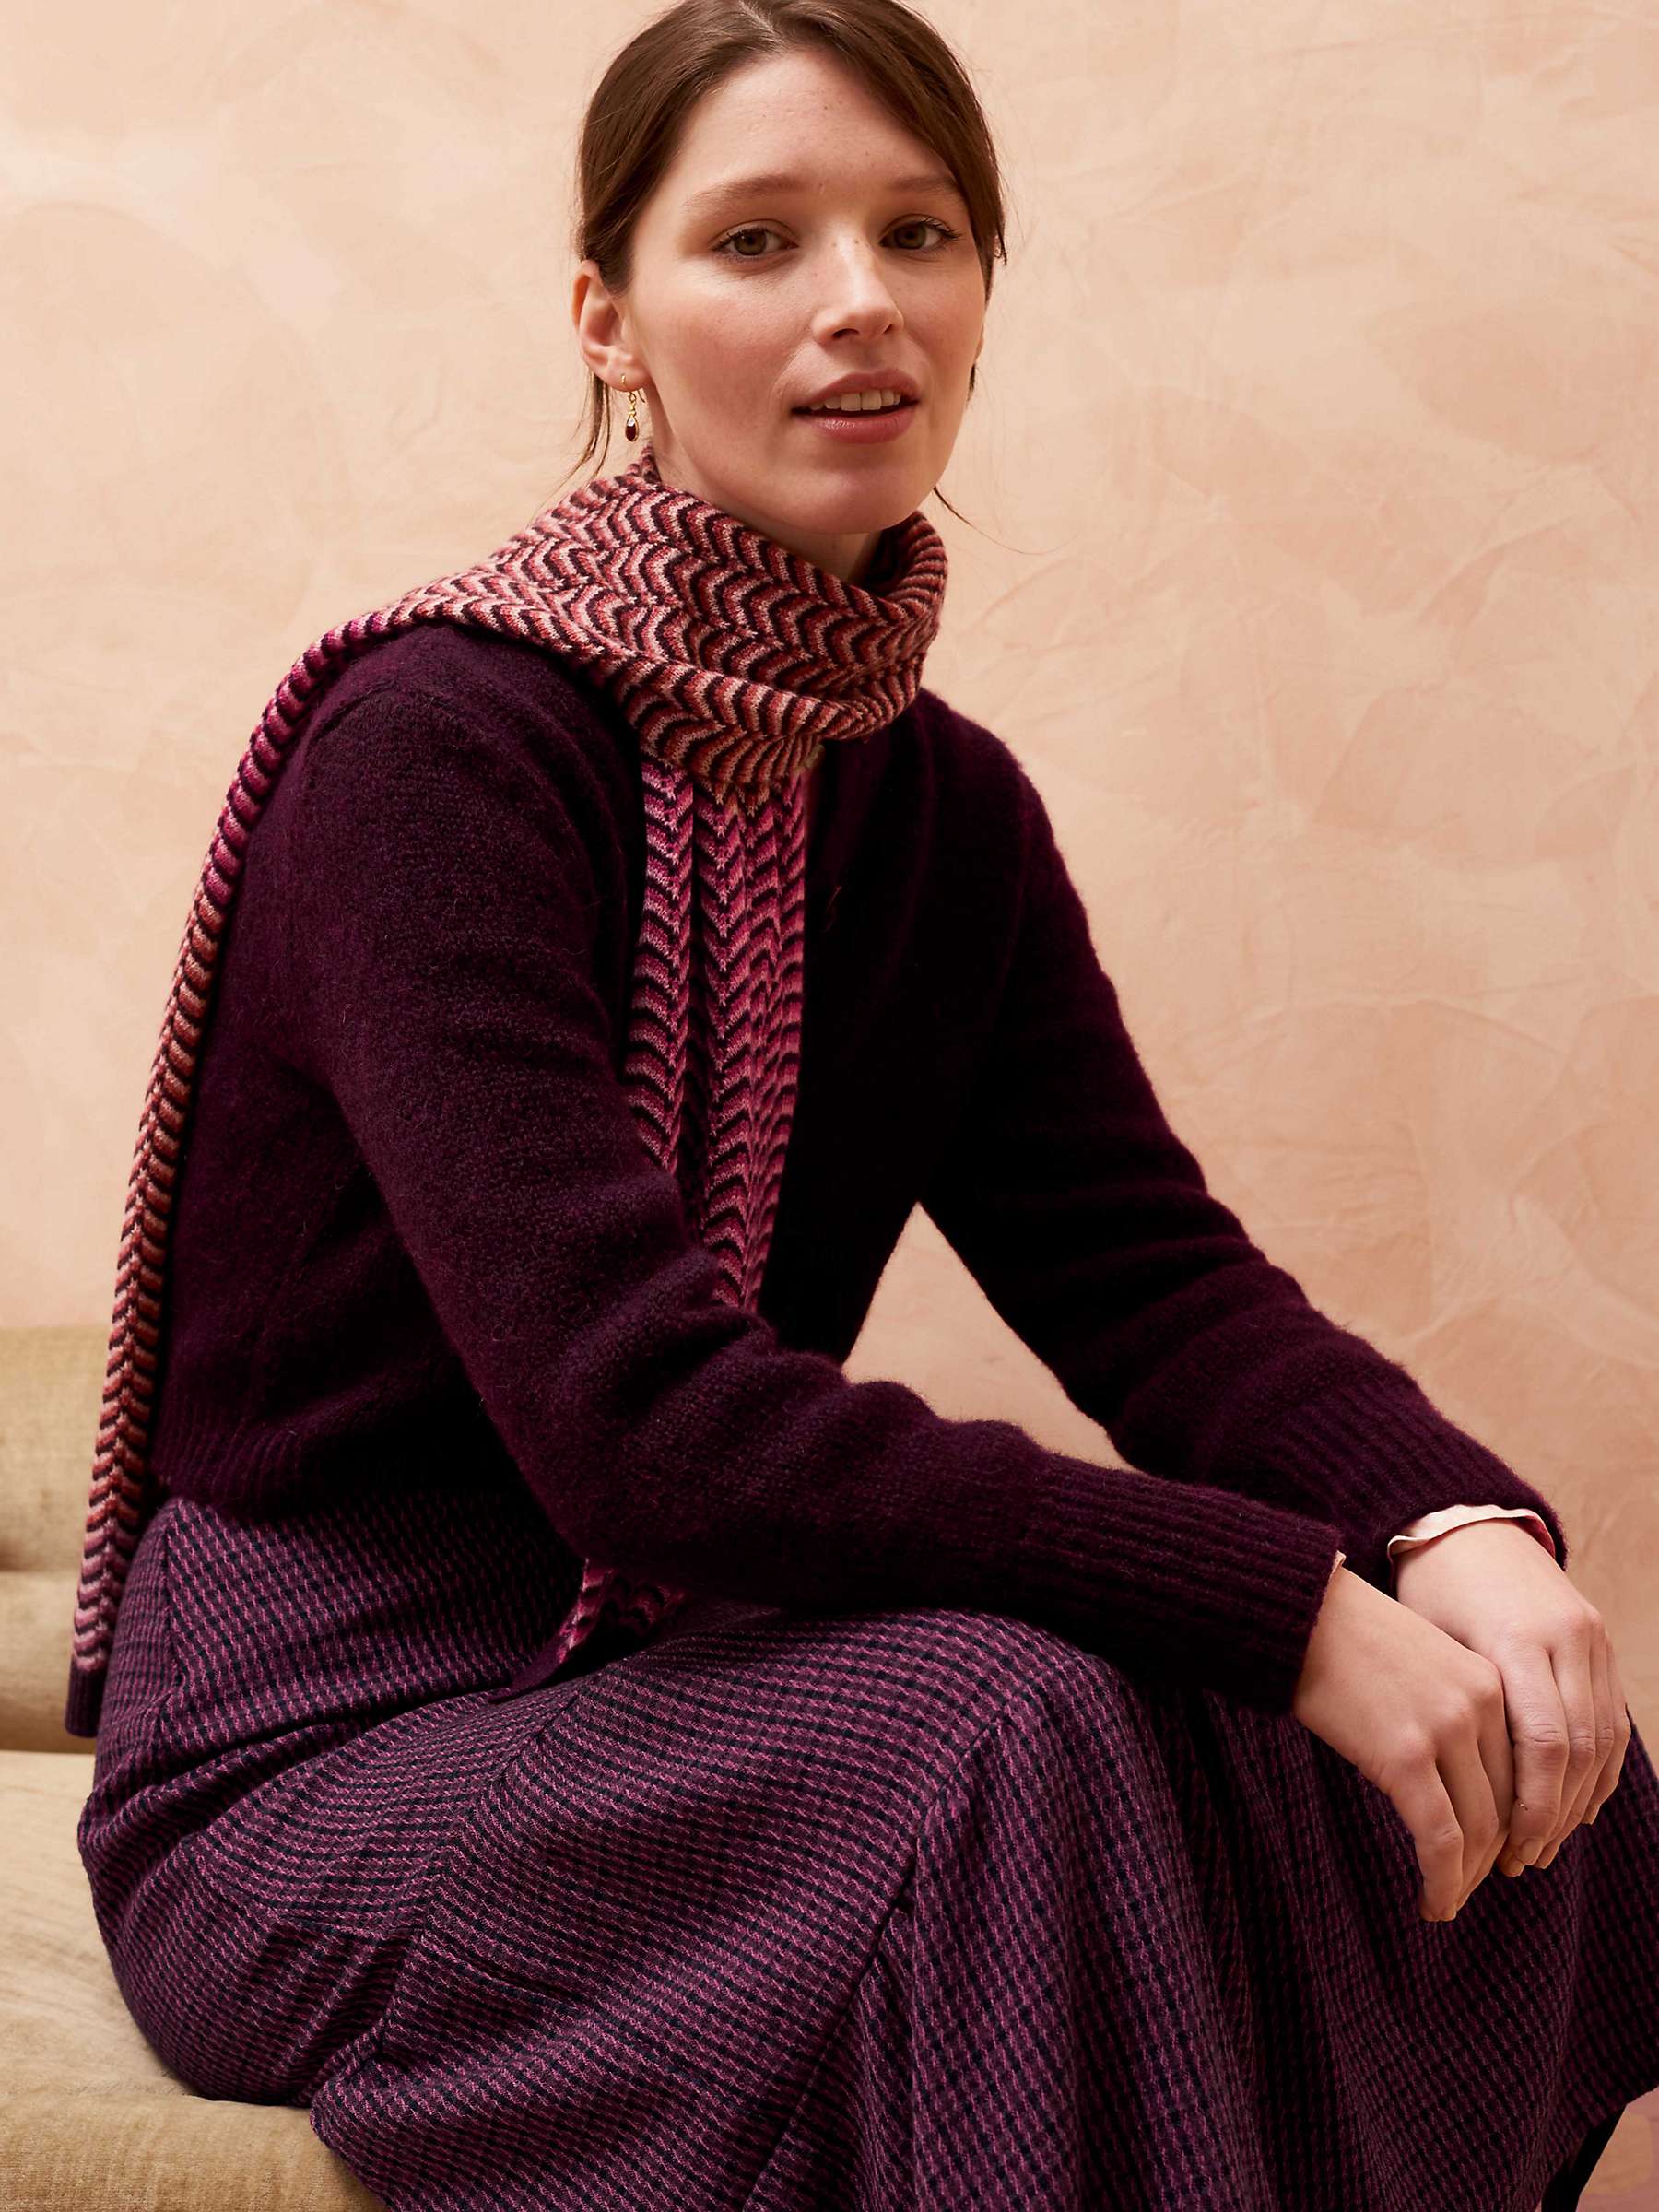 Buy Brora Textured Weave Tiered Skirt, Midnight/Rose Online at johnlewis.com